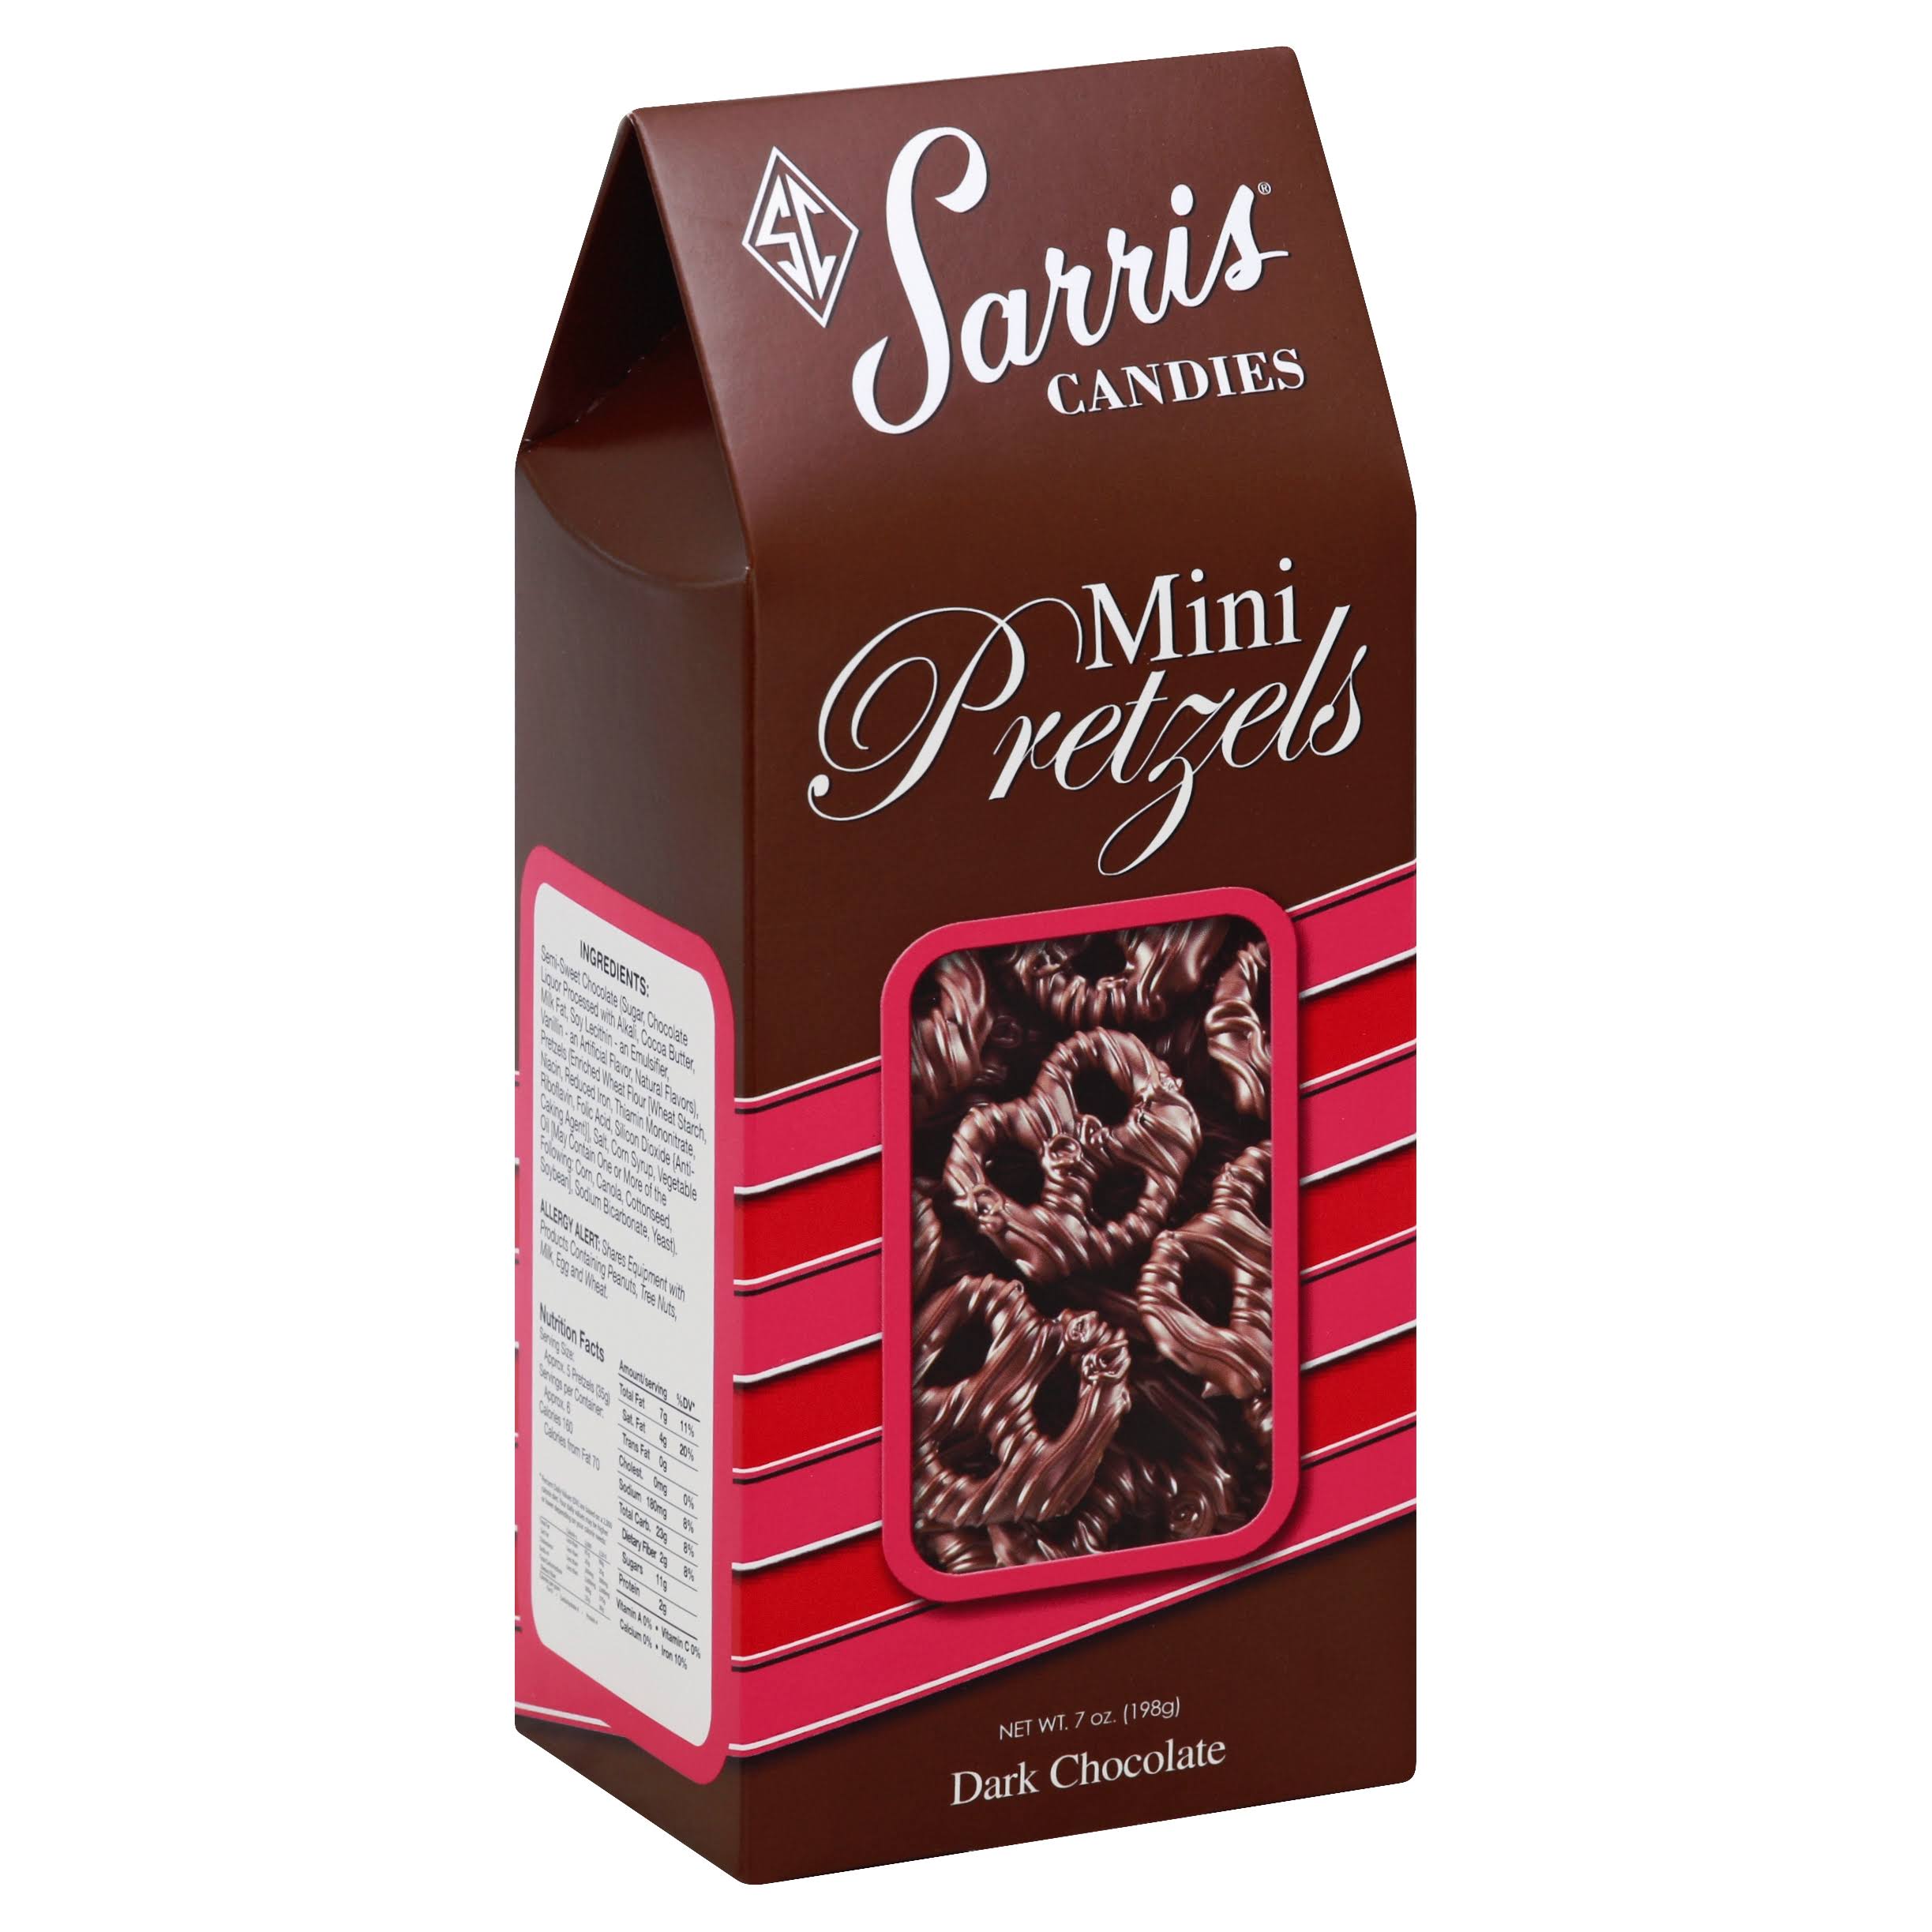 Sarris Candies Pretzels, Dark Chocolate, Mini - 7 oz